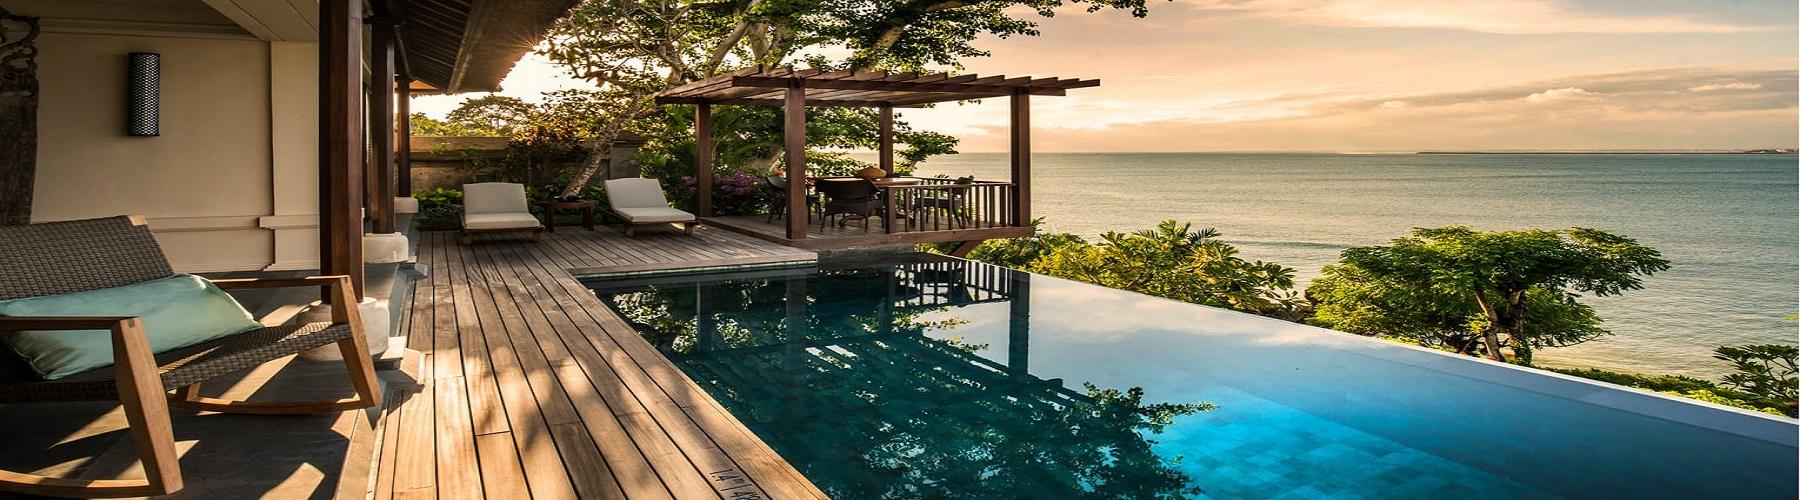 Забронировать виллу в Four Seasons Resort Bali